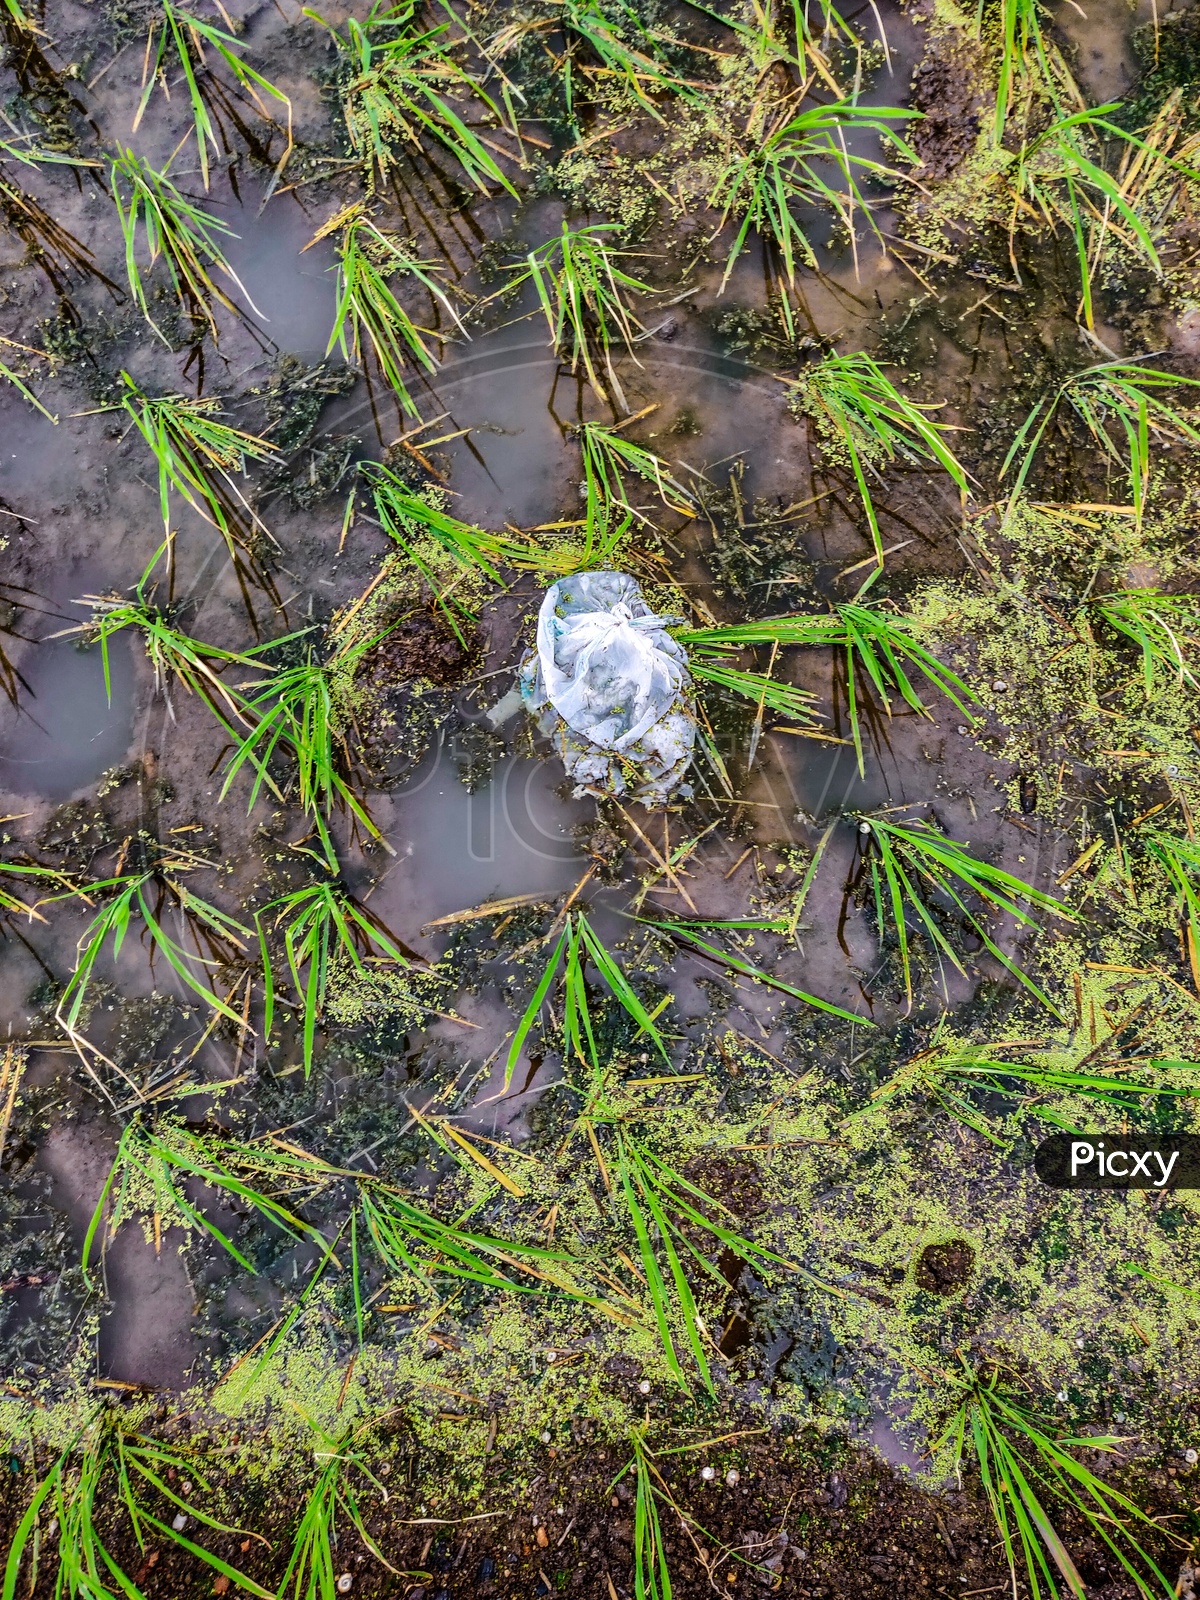 Plastic pollution in fields